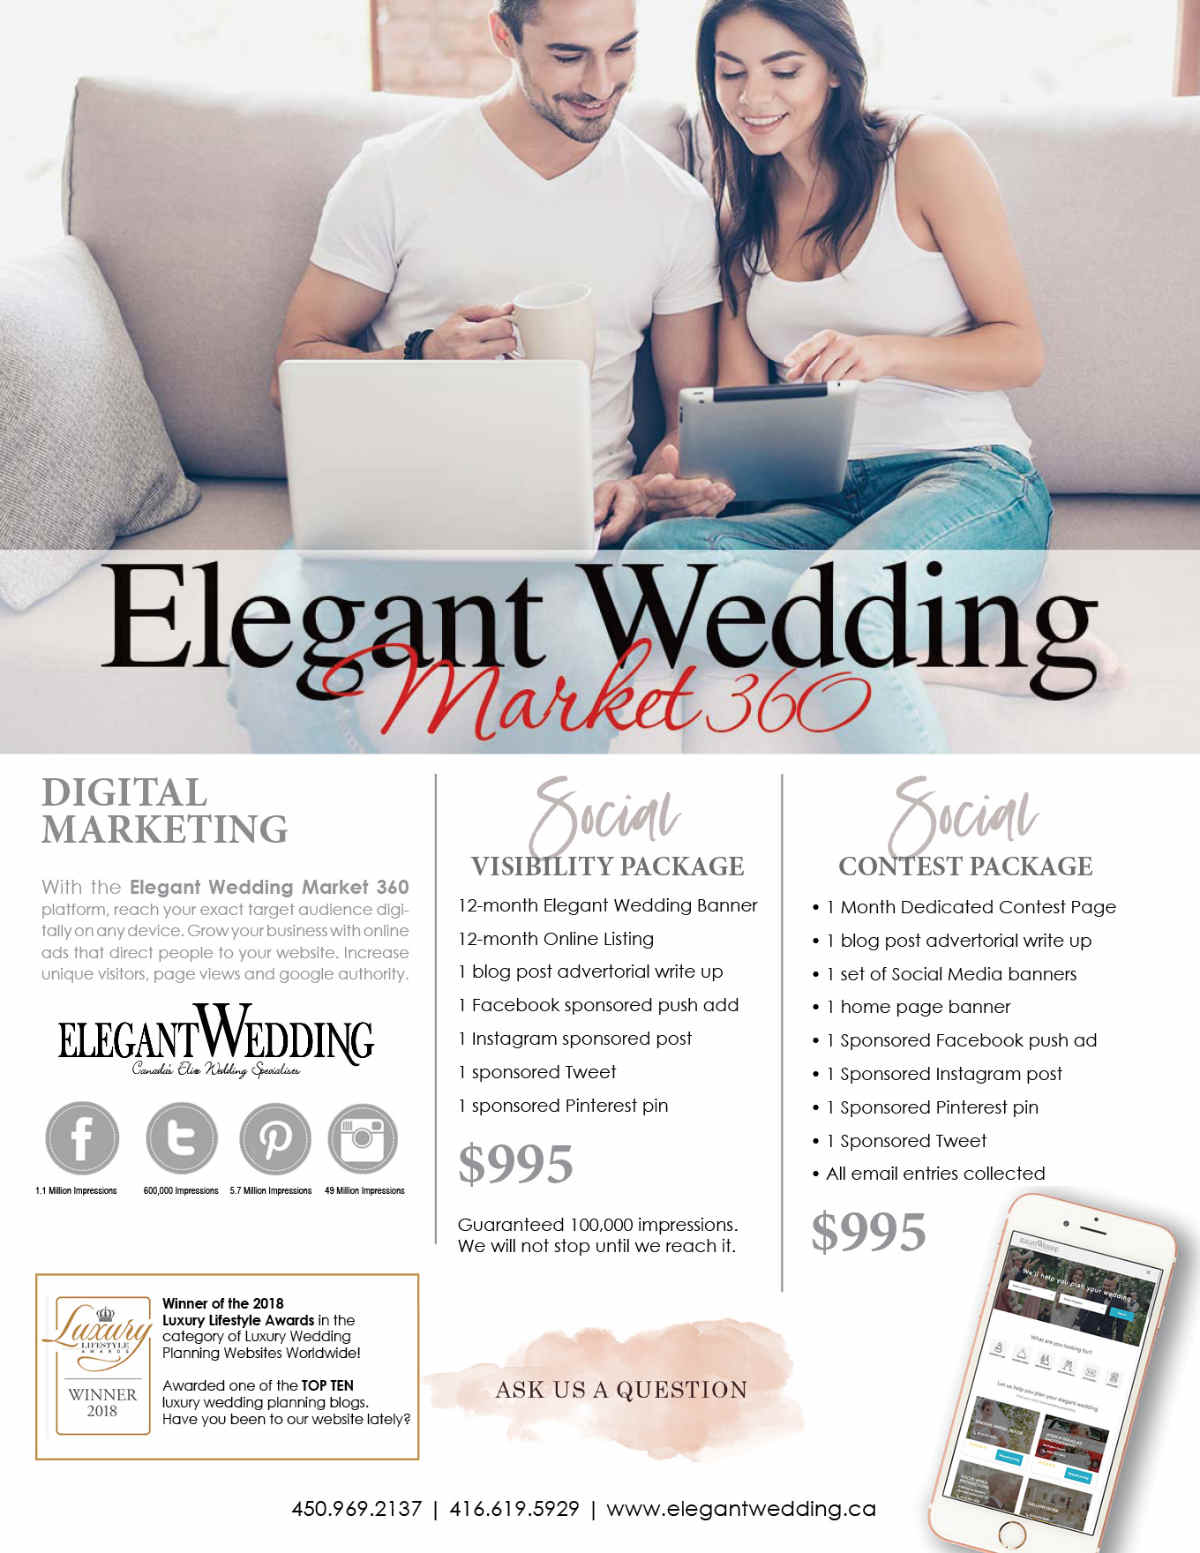 ELEGANT WEDDING MARKET 360 DIGITAL ADVERTISING